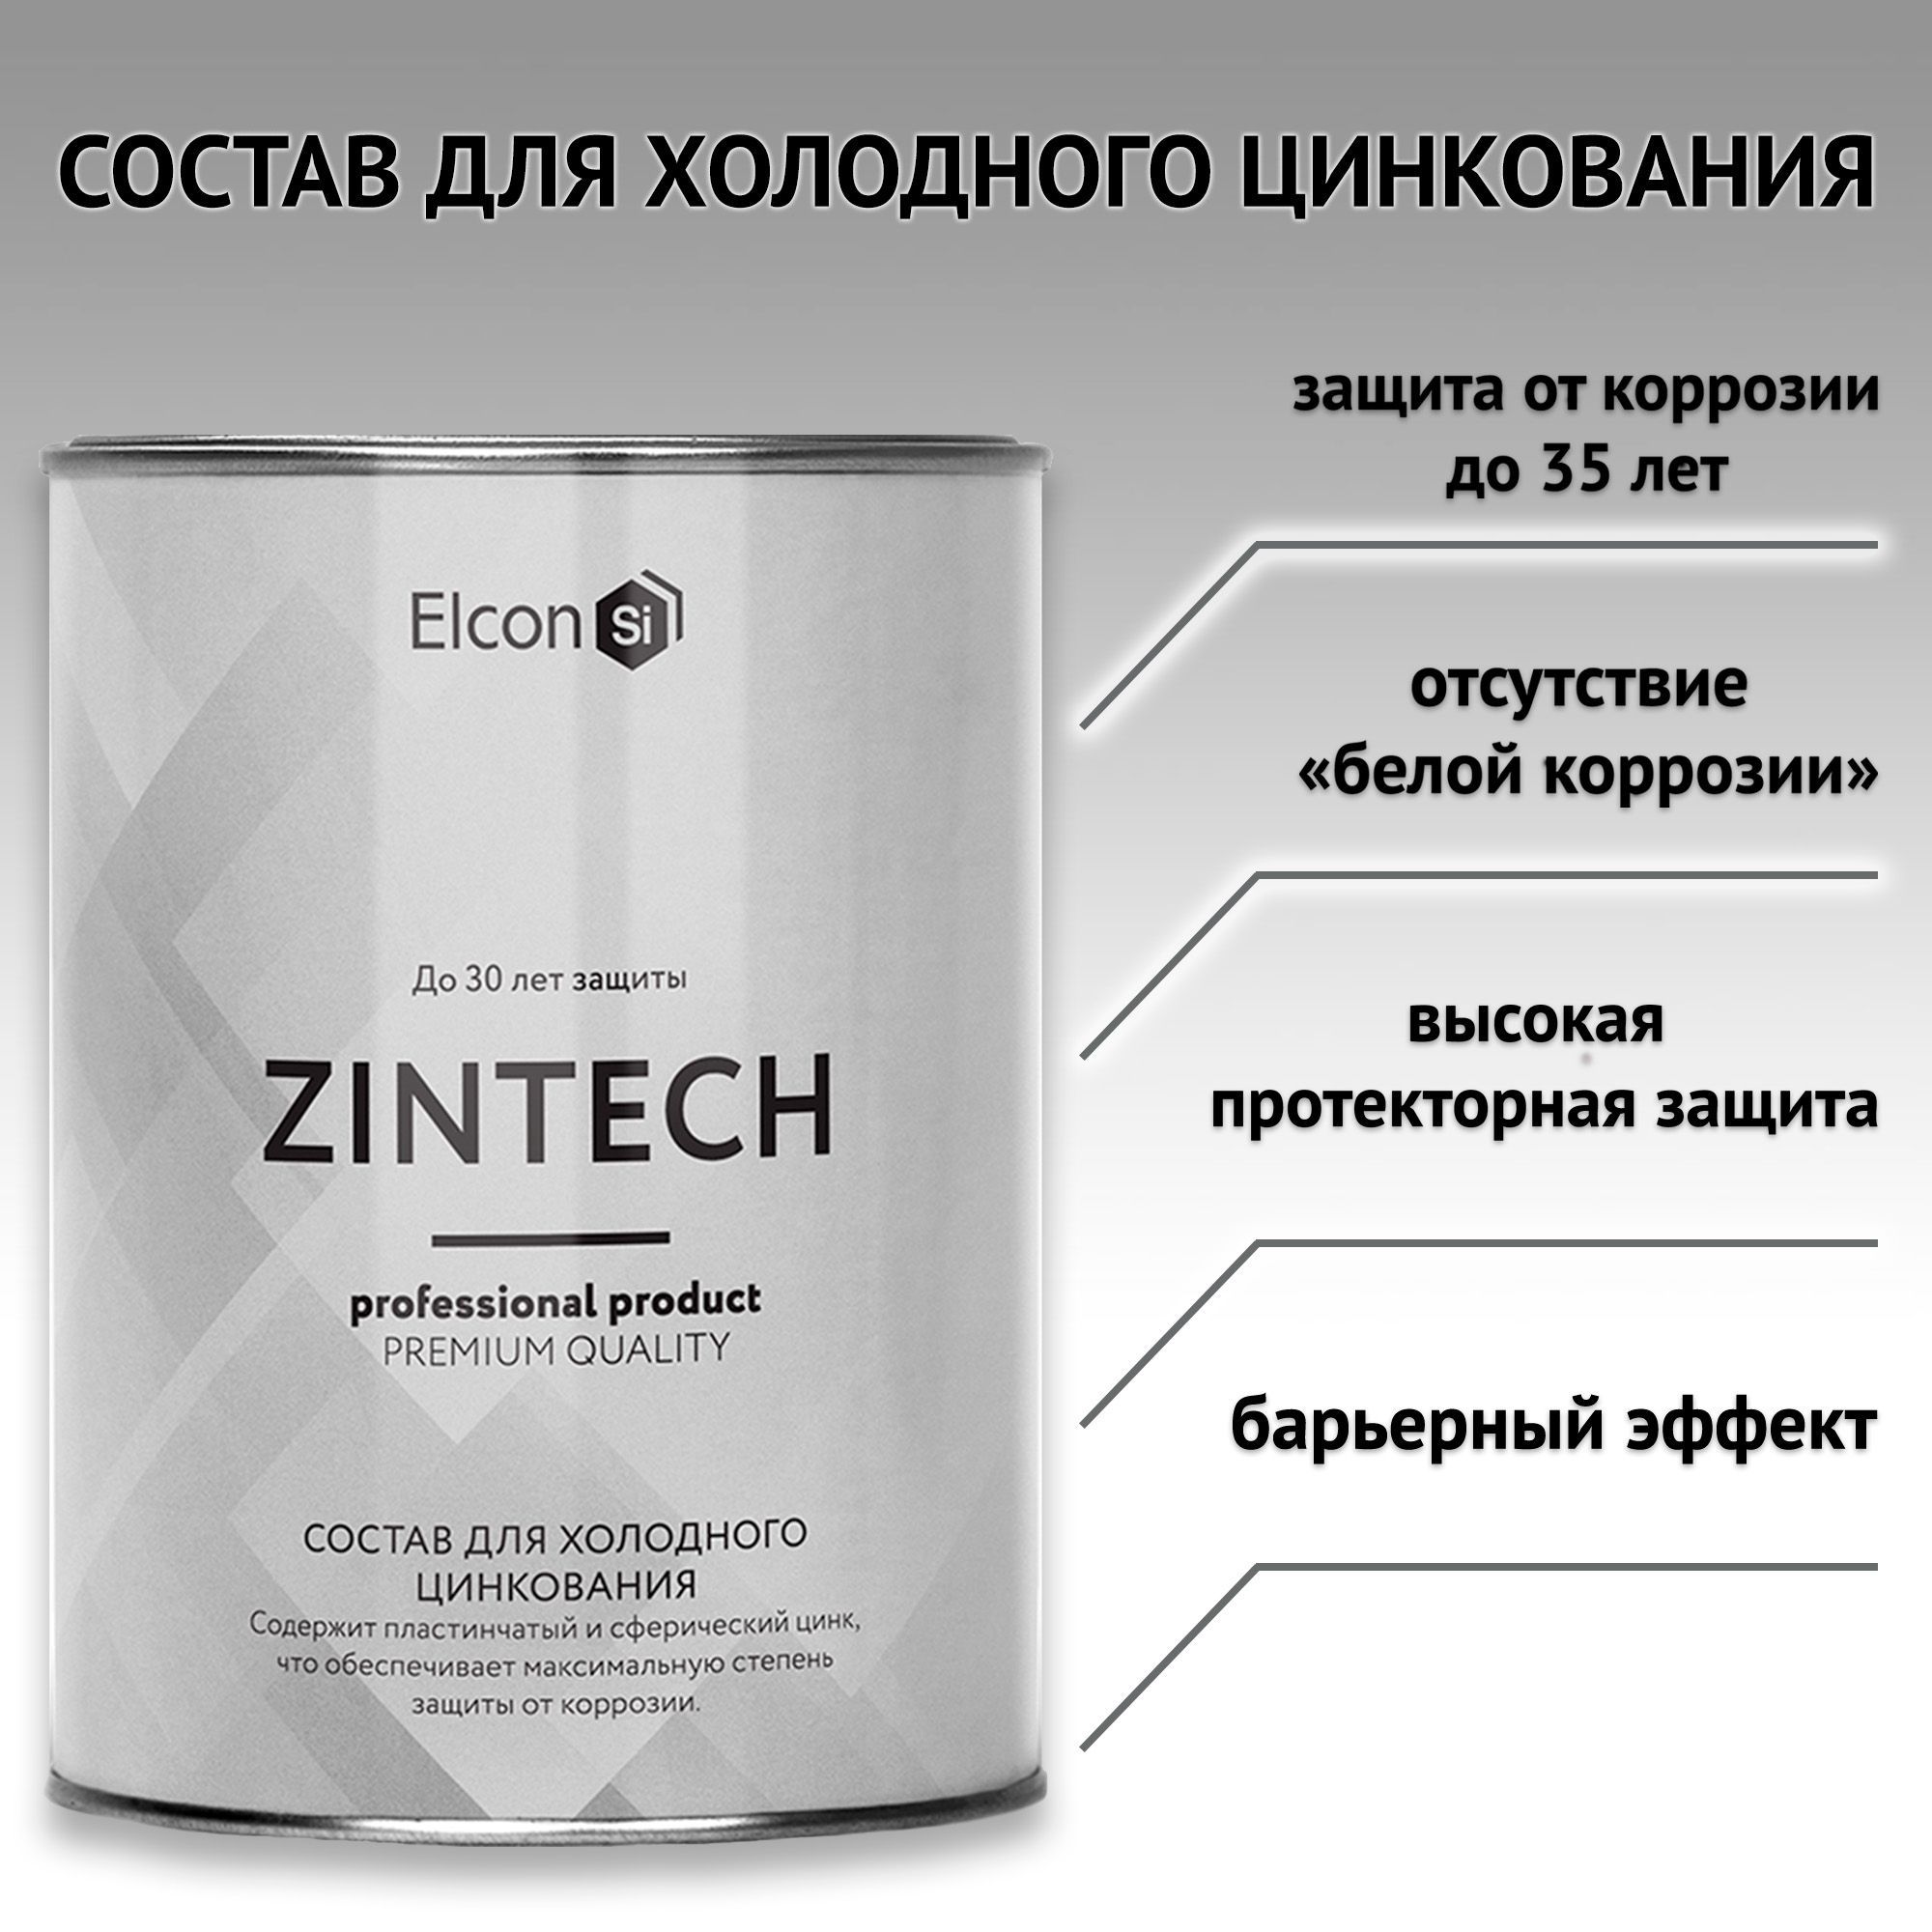 Elcon zintech холодное цинкование